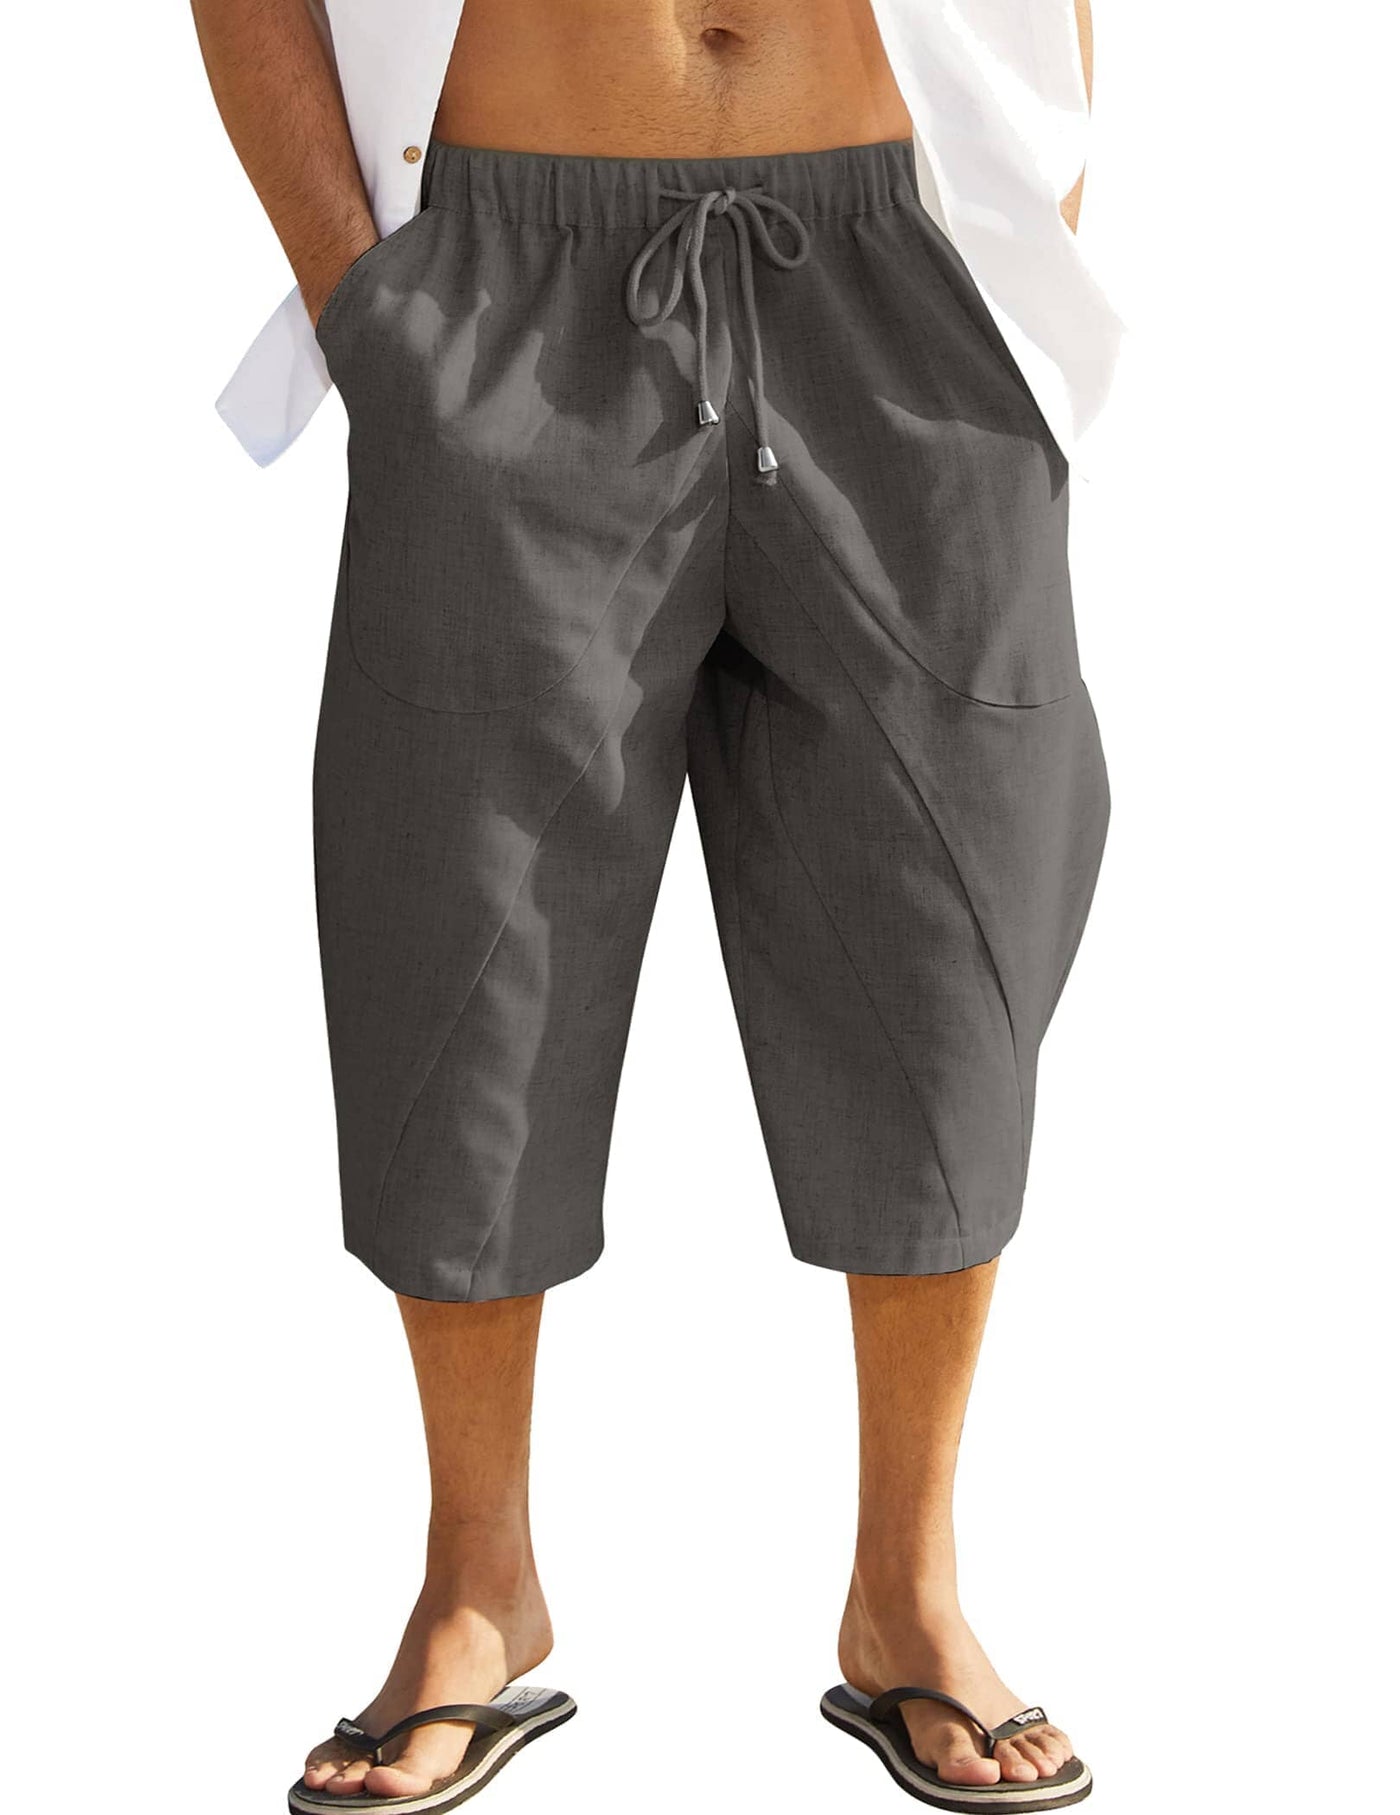 Coofandy Cotton Style Yoga Beach Pants (US Only) Pants coofandy Dark Grey S 